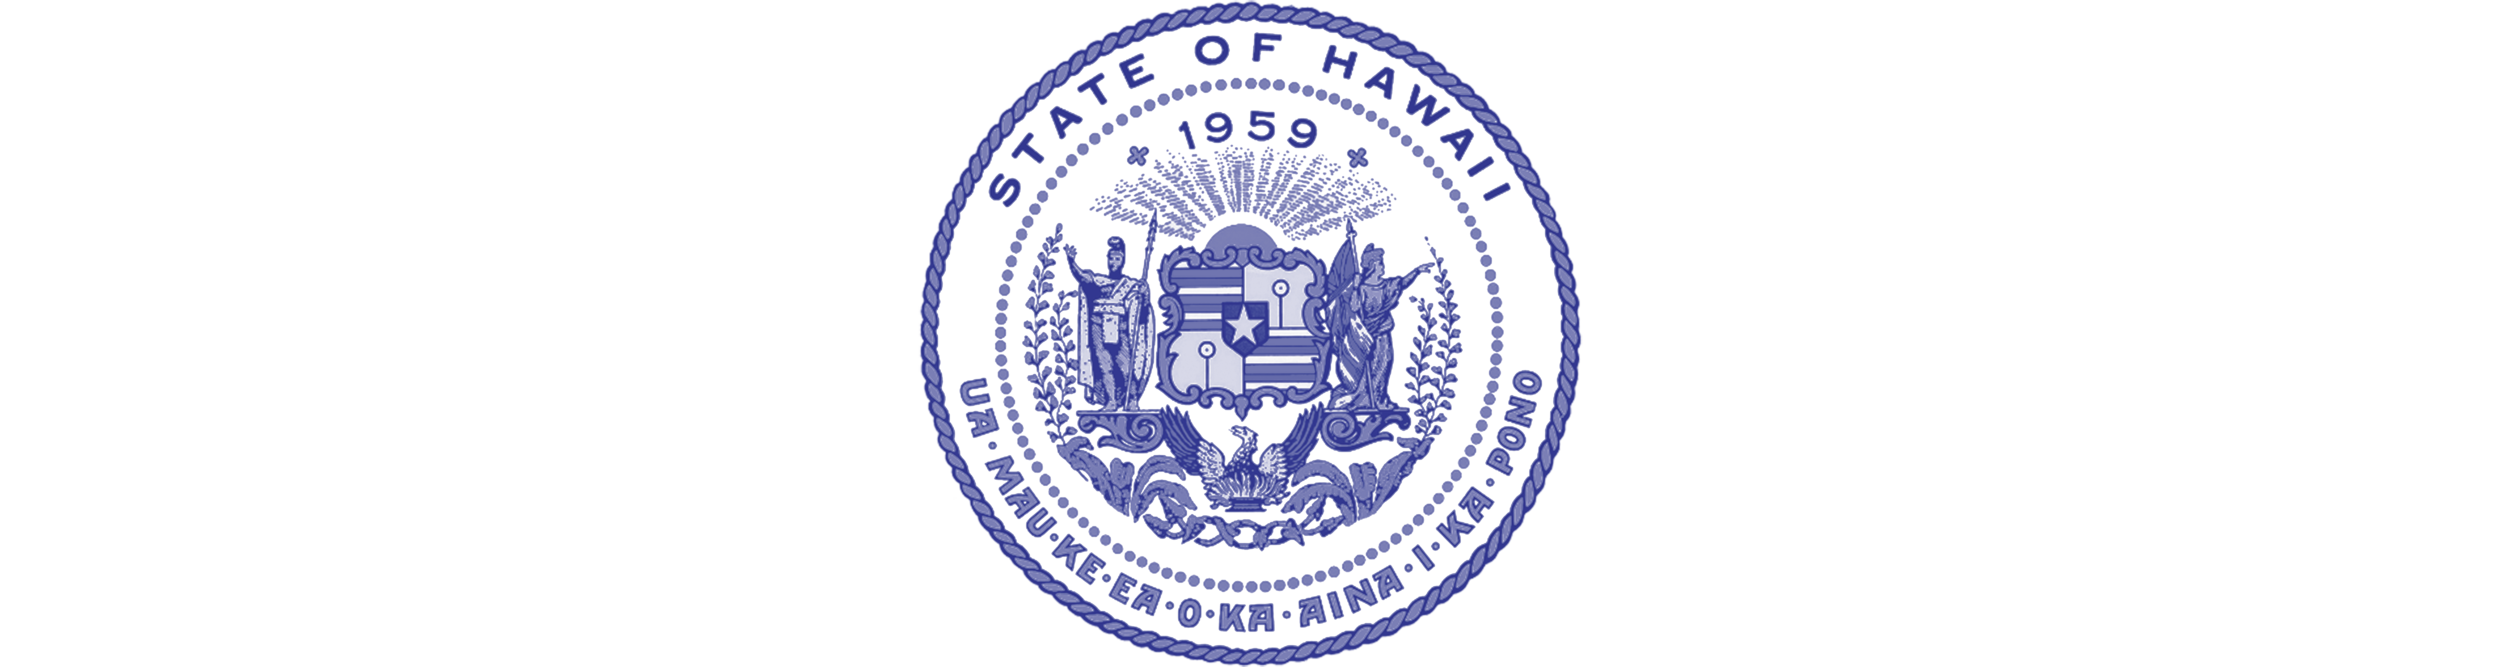 HPHA-ressourcen-logo-Staat-Hawaii.png